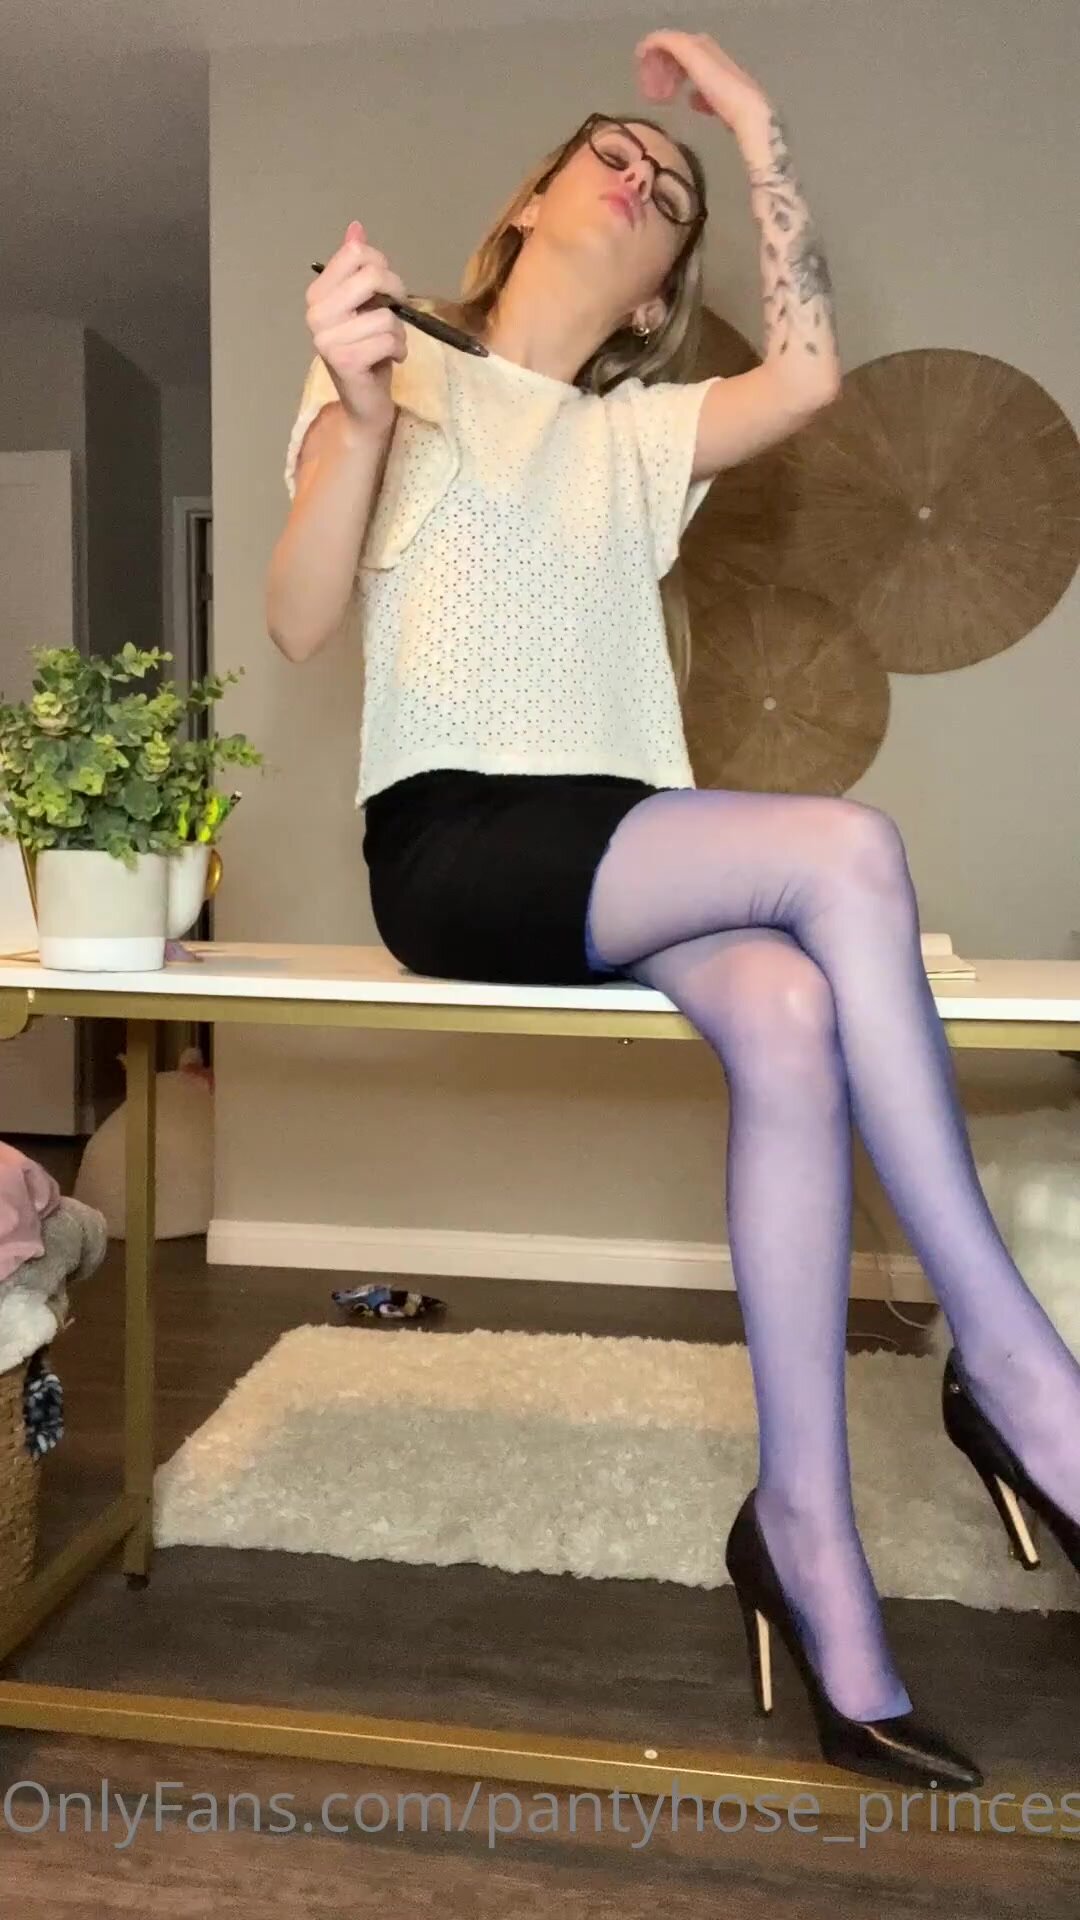 Blonde in stockings and heels dildo fucks herself